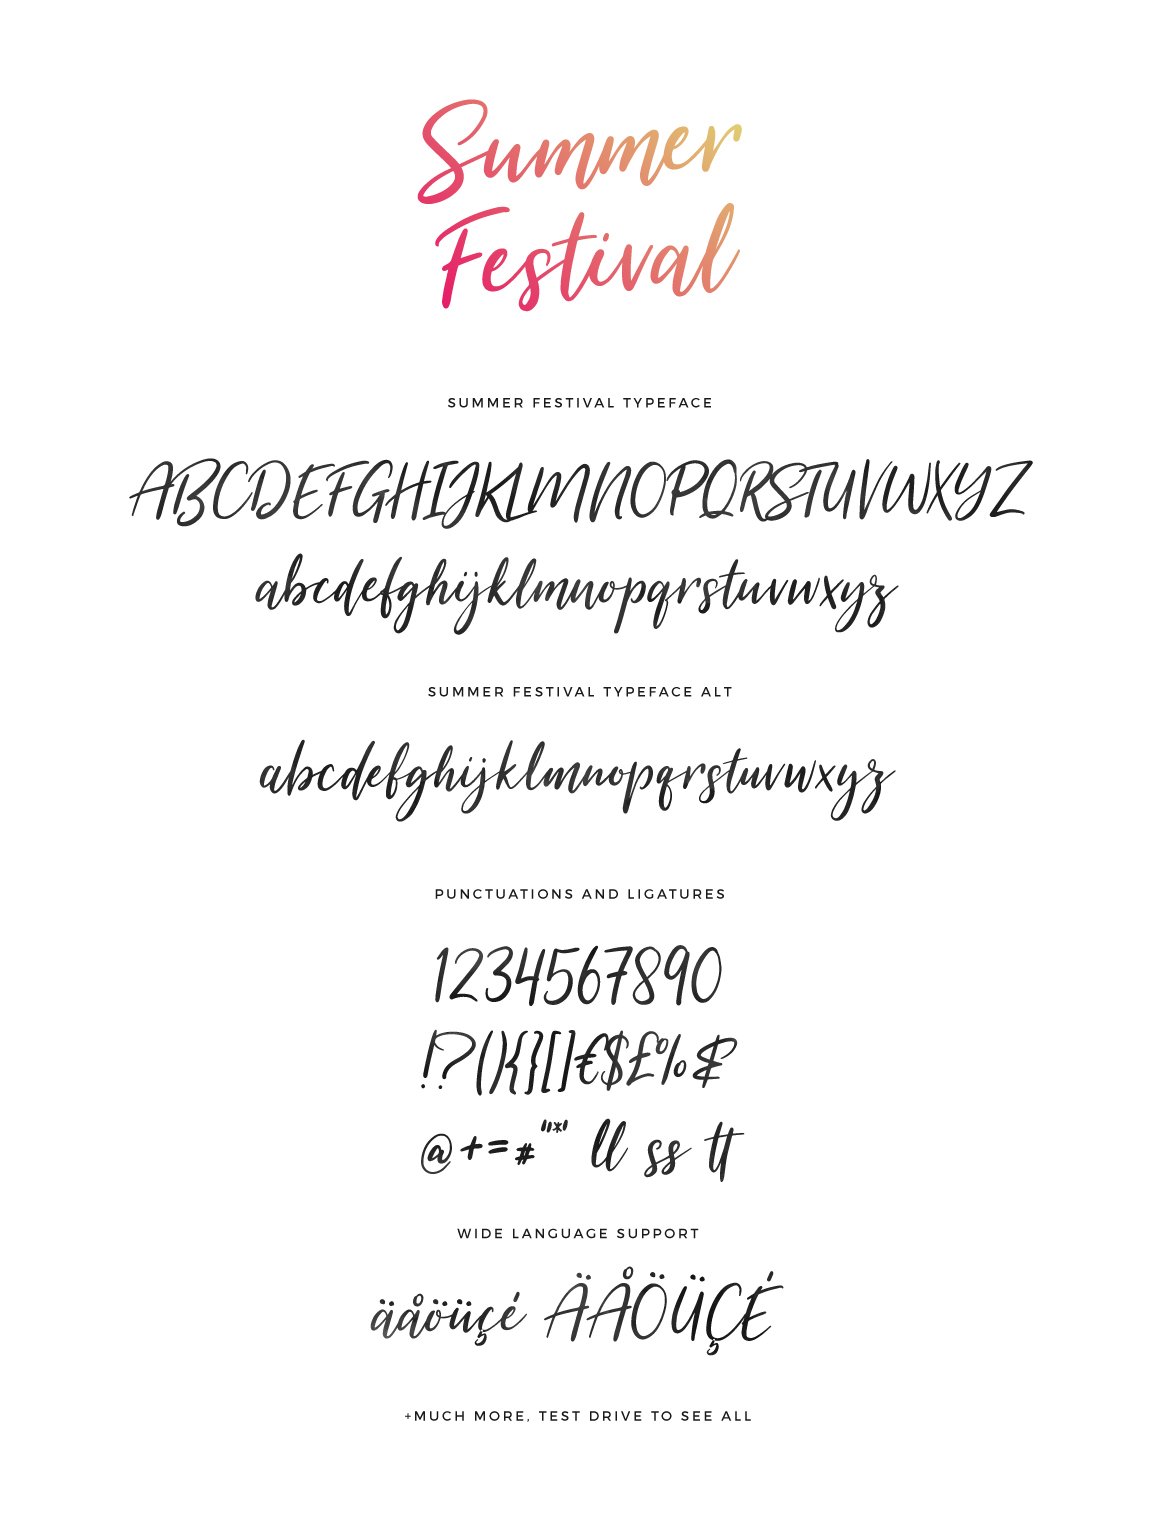 Summer Festival Typeface